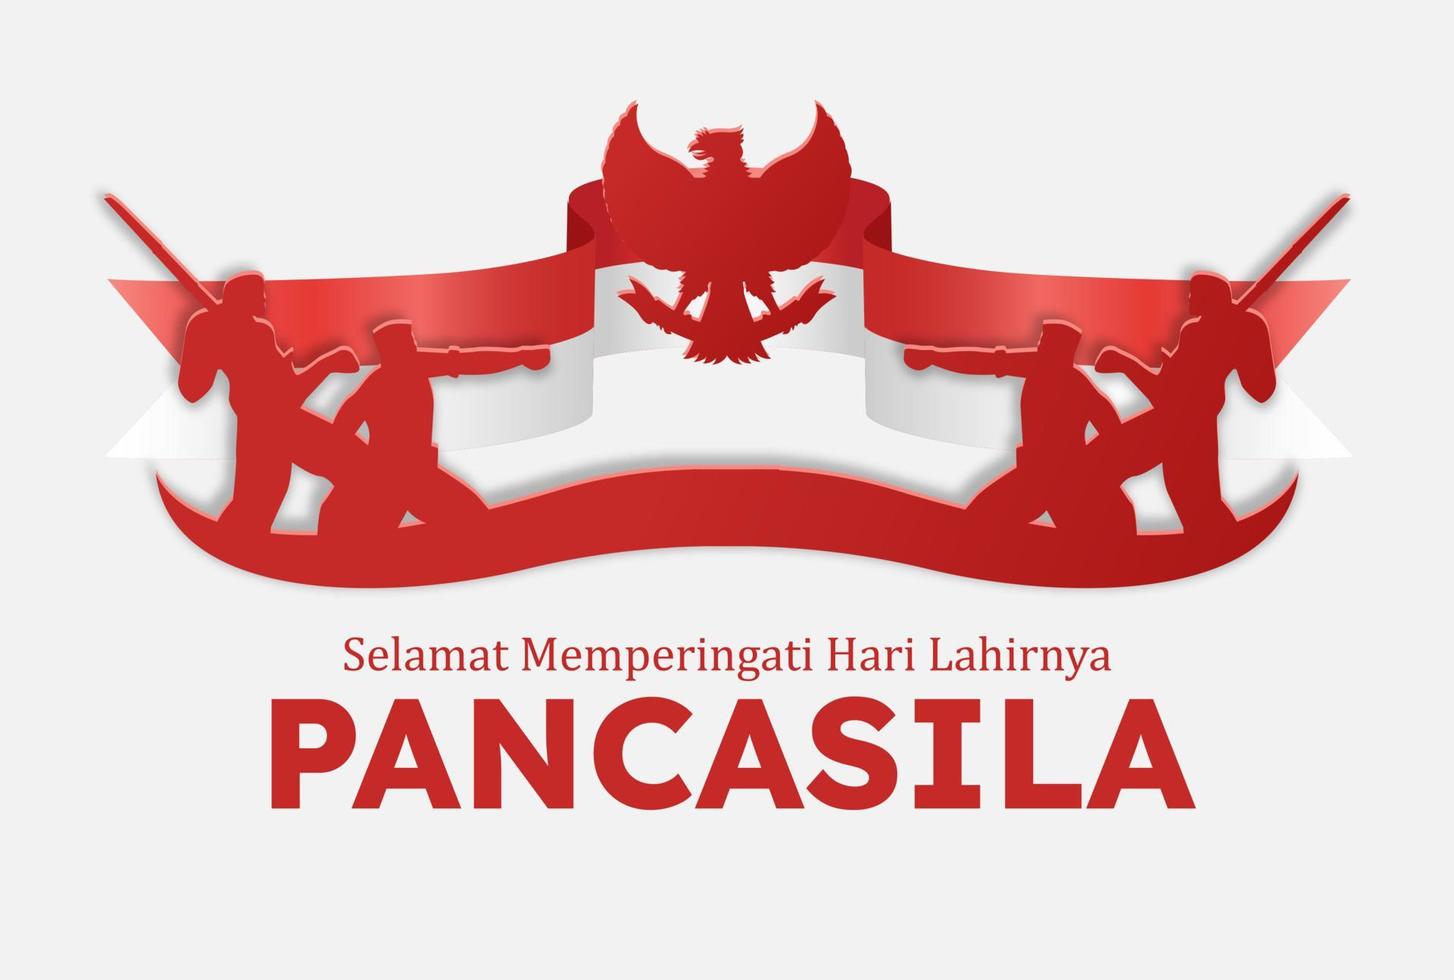 selamat hari pancasila betekent gelukkige pancasila-dag, het symbool van de republiek indonesië vector